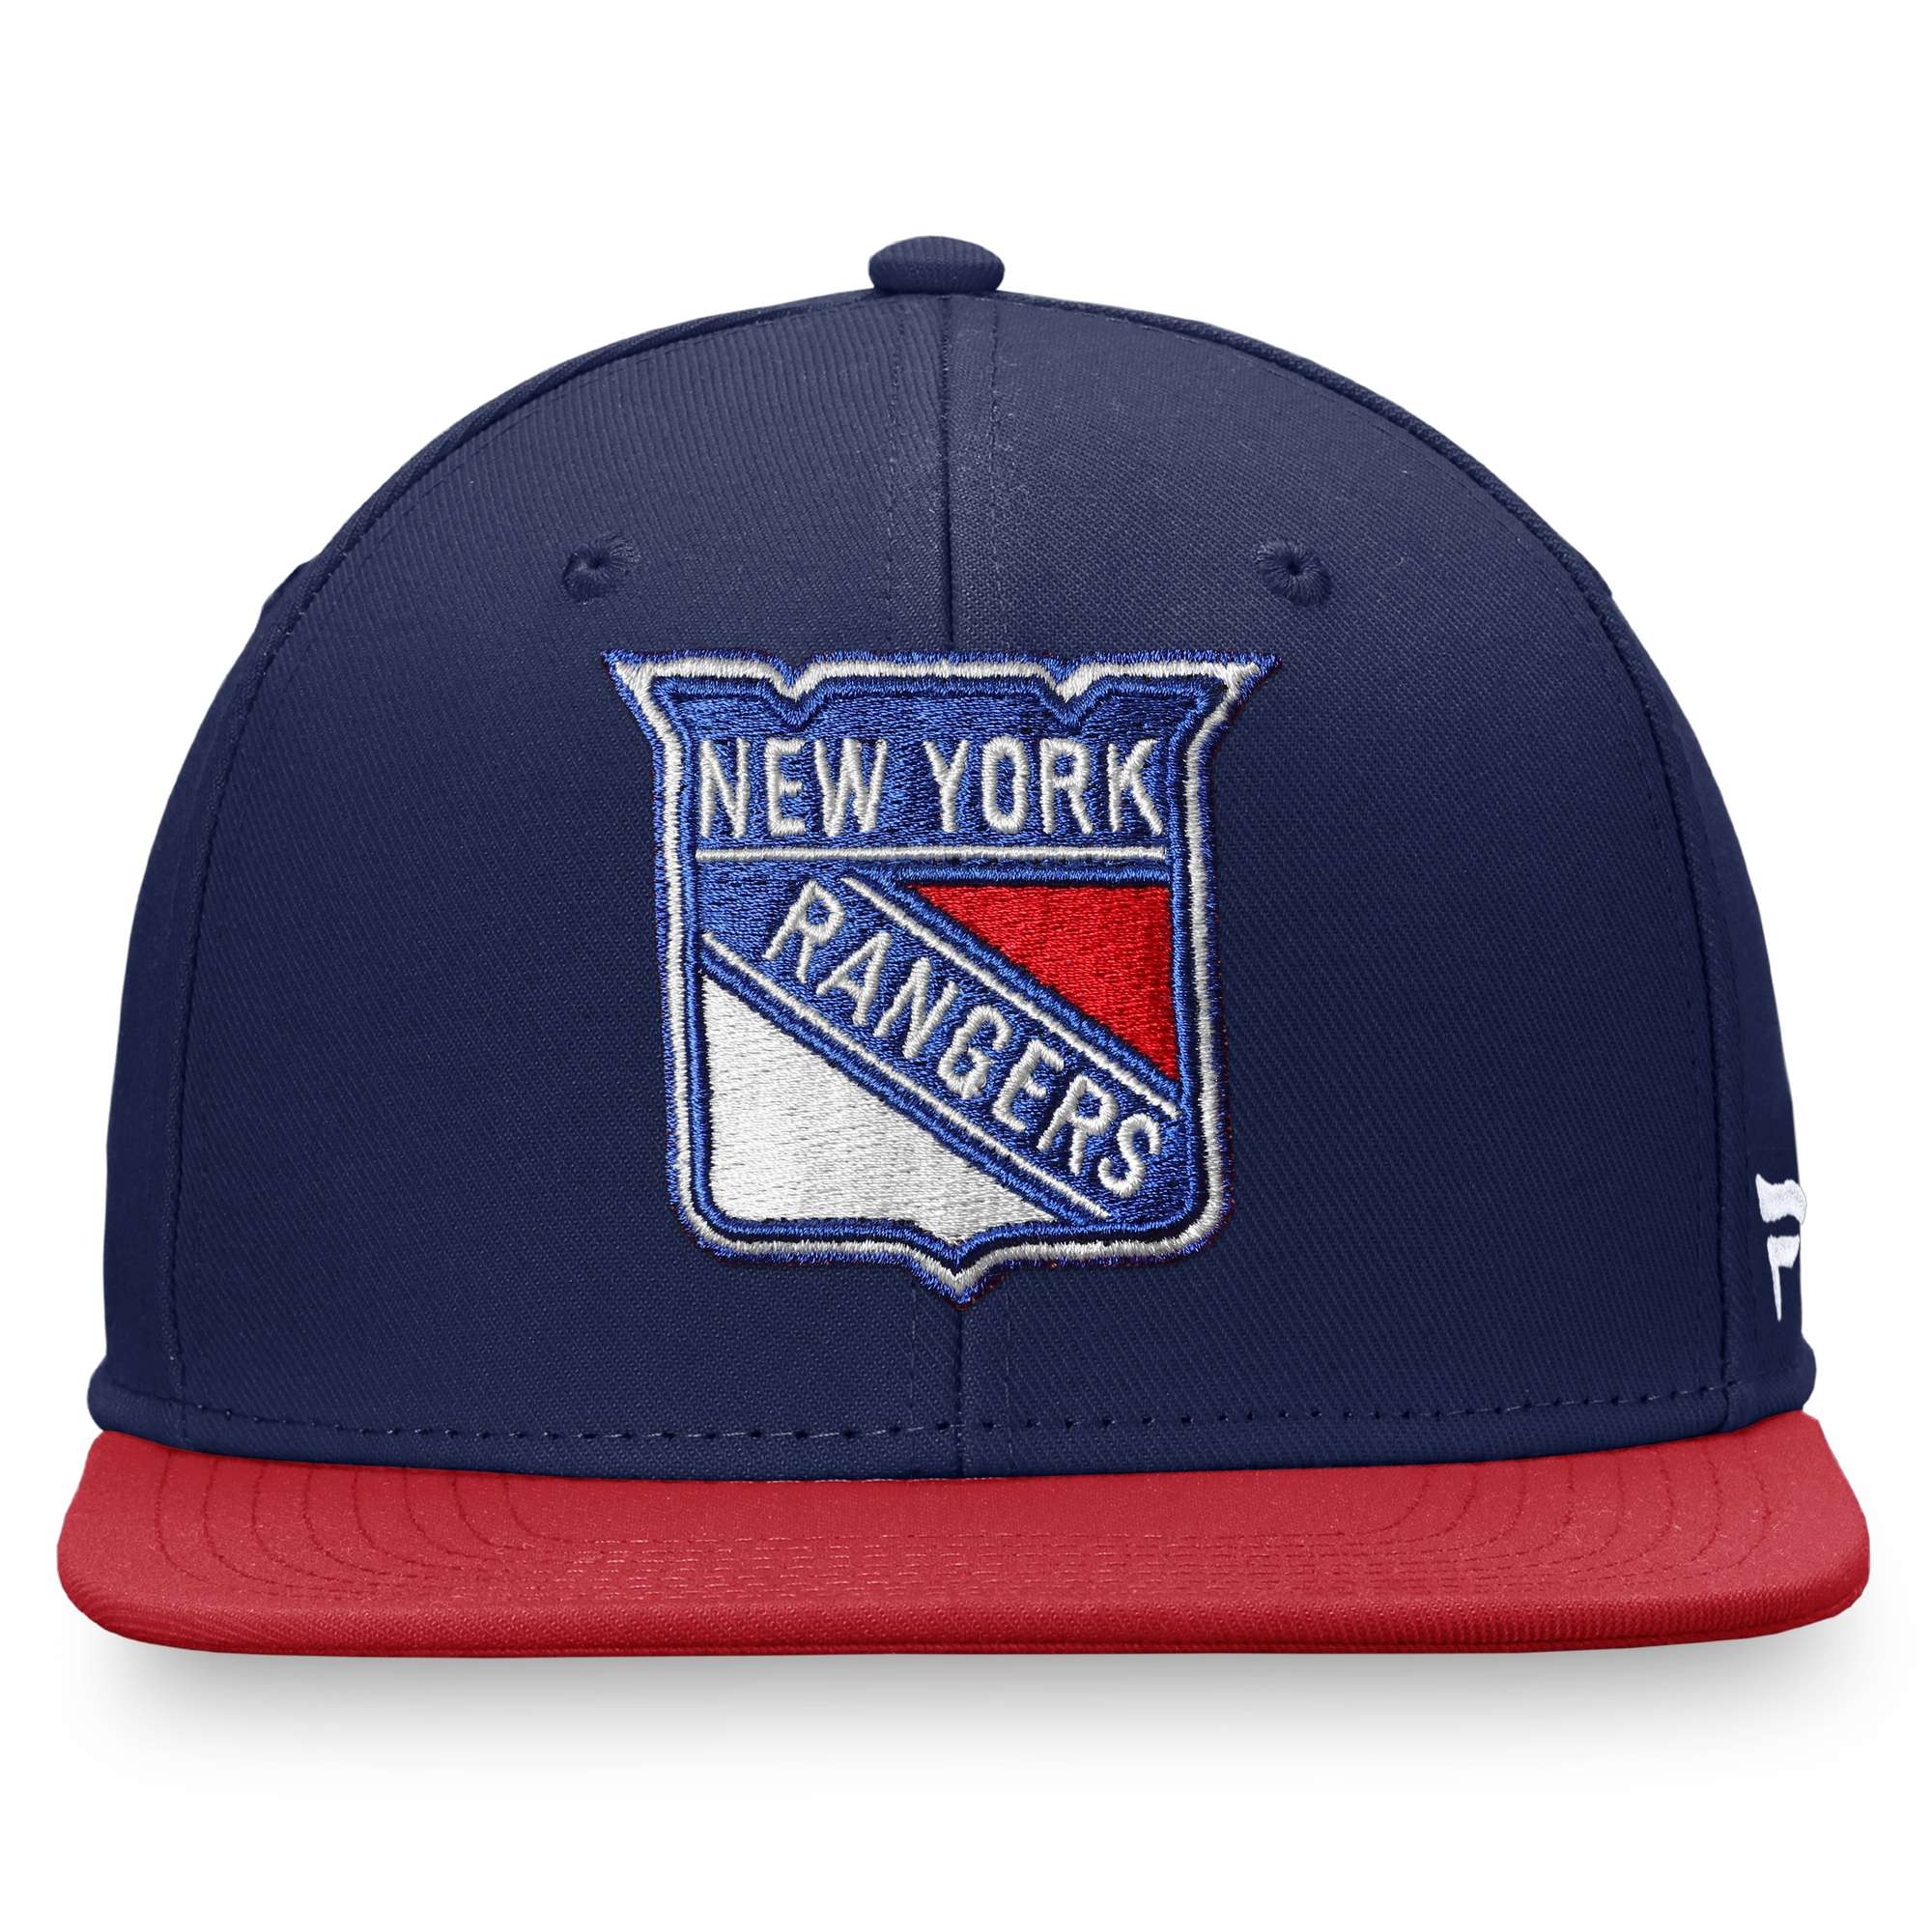 Fanatics - NHL New York Rangers Core Snapback Cap - Mehrfarbig